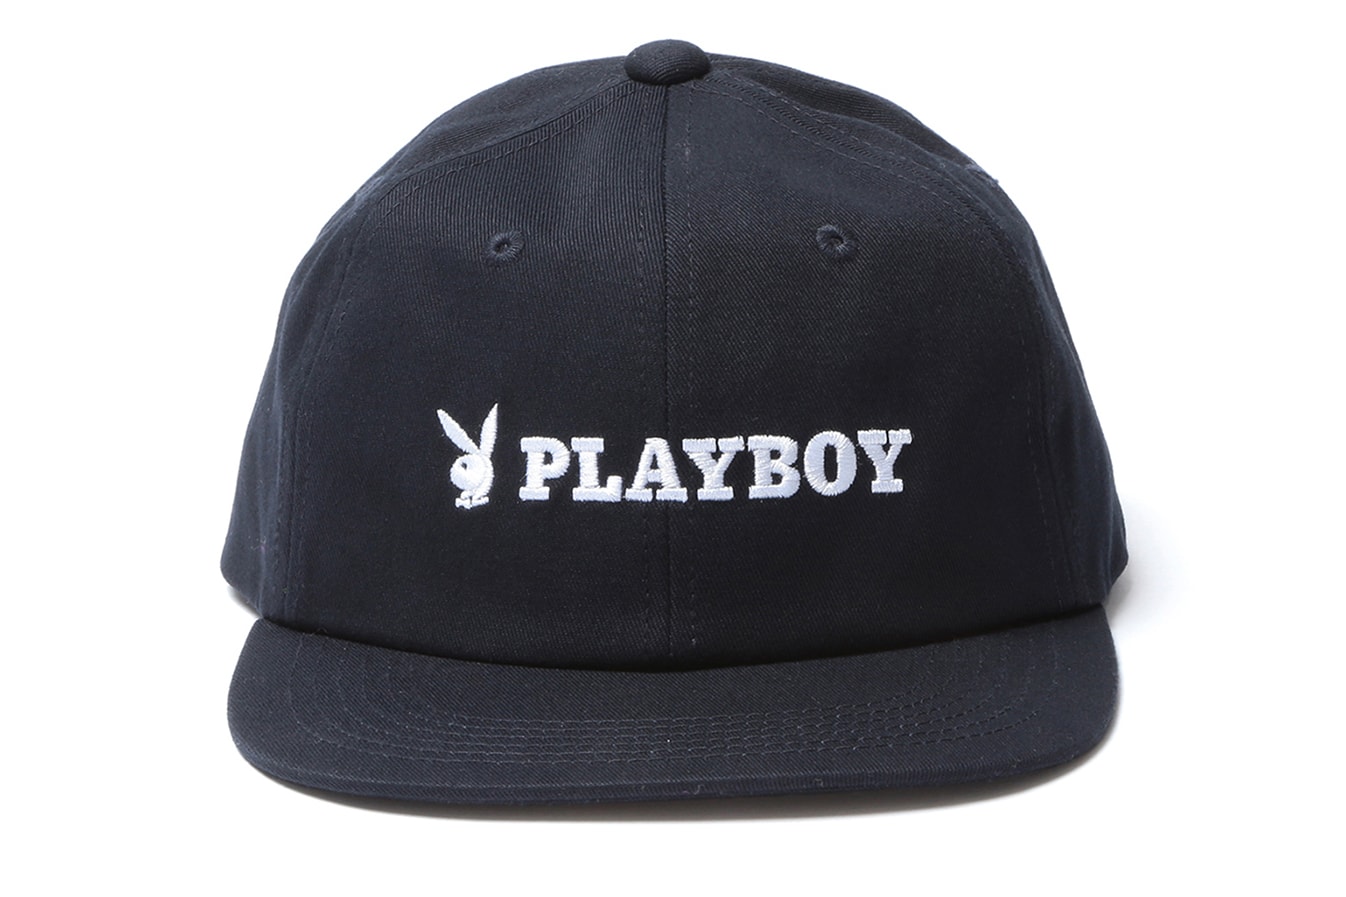 Playboy BEAMS T Collaborative Capsule Release Drop Harajuku Tokyo Playmate Logo Bunny